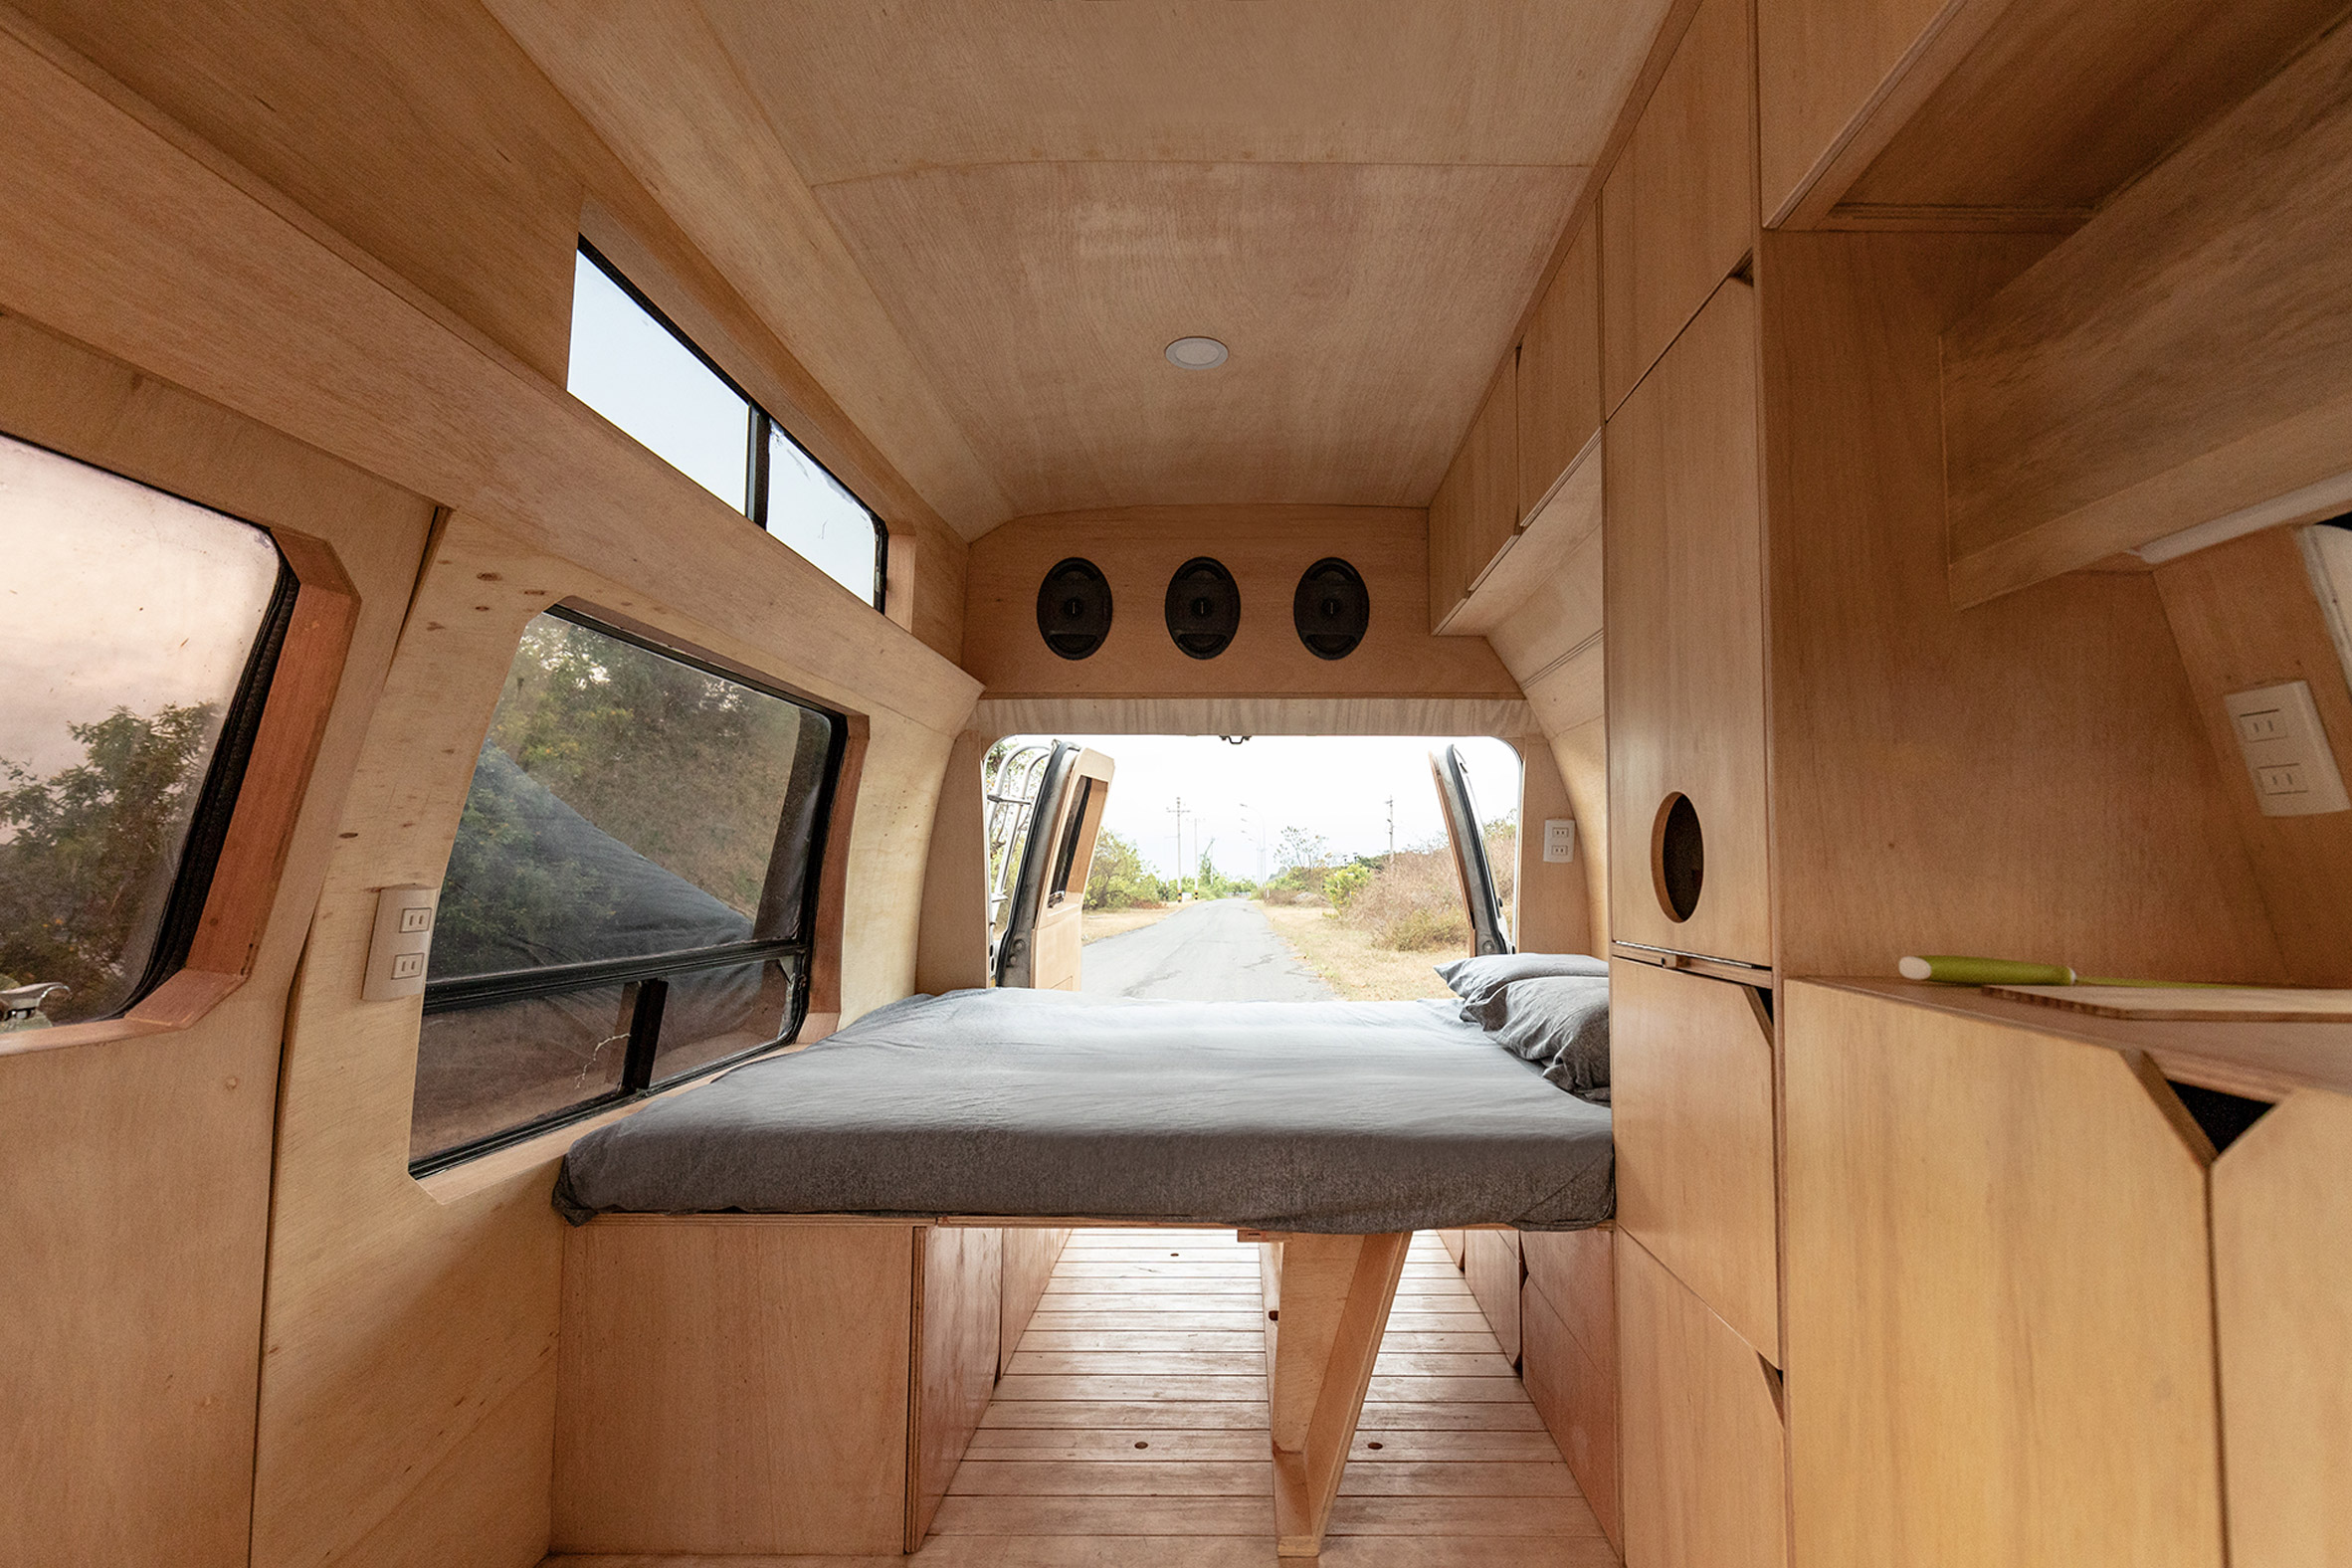 A grey mattress inside a mobile home